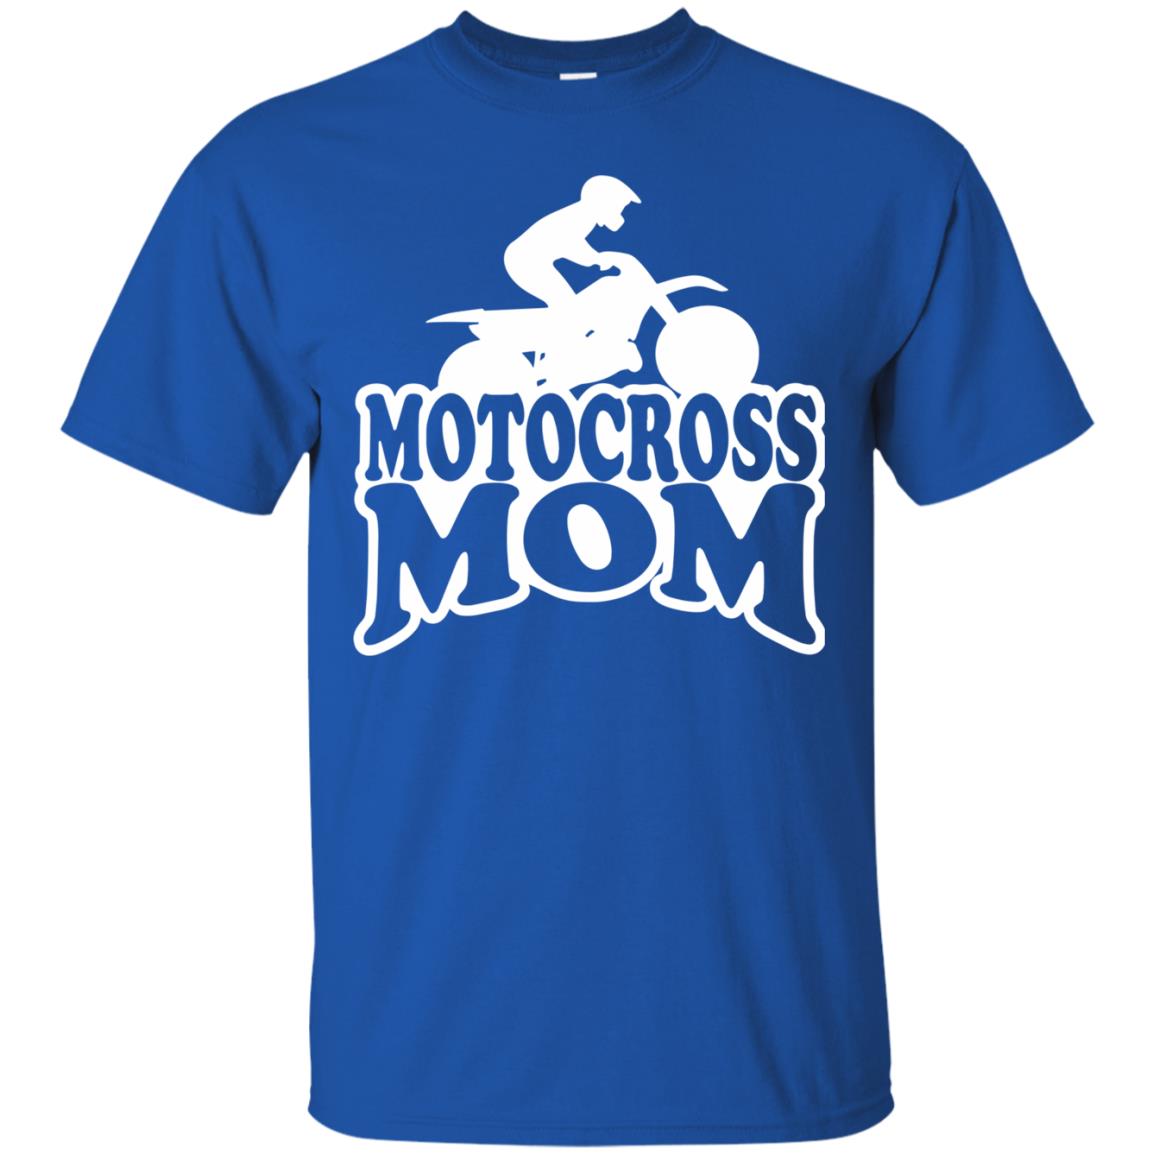 Motocross Mom Shirt 10 Off FavorMerch